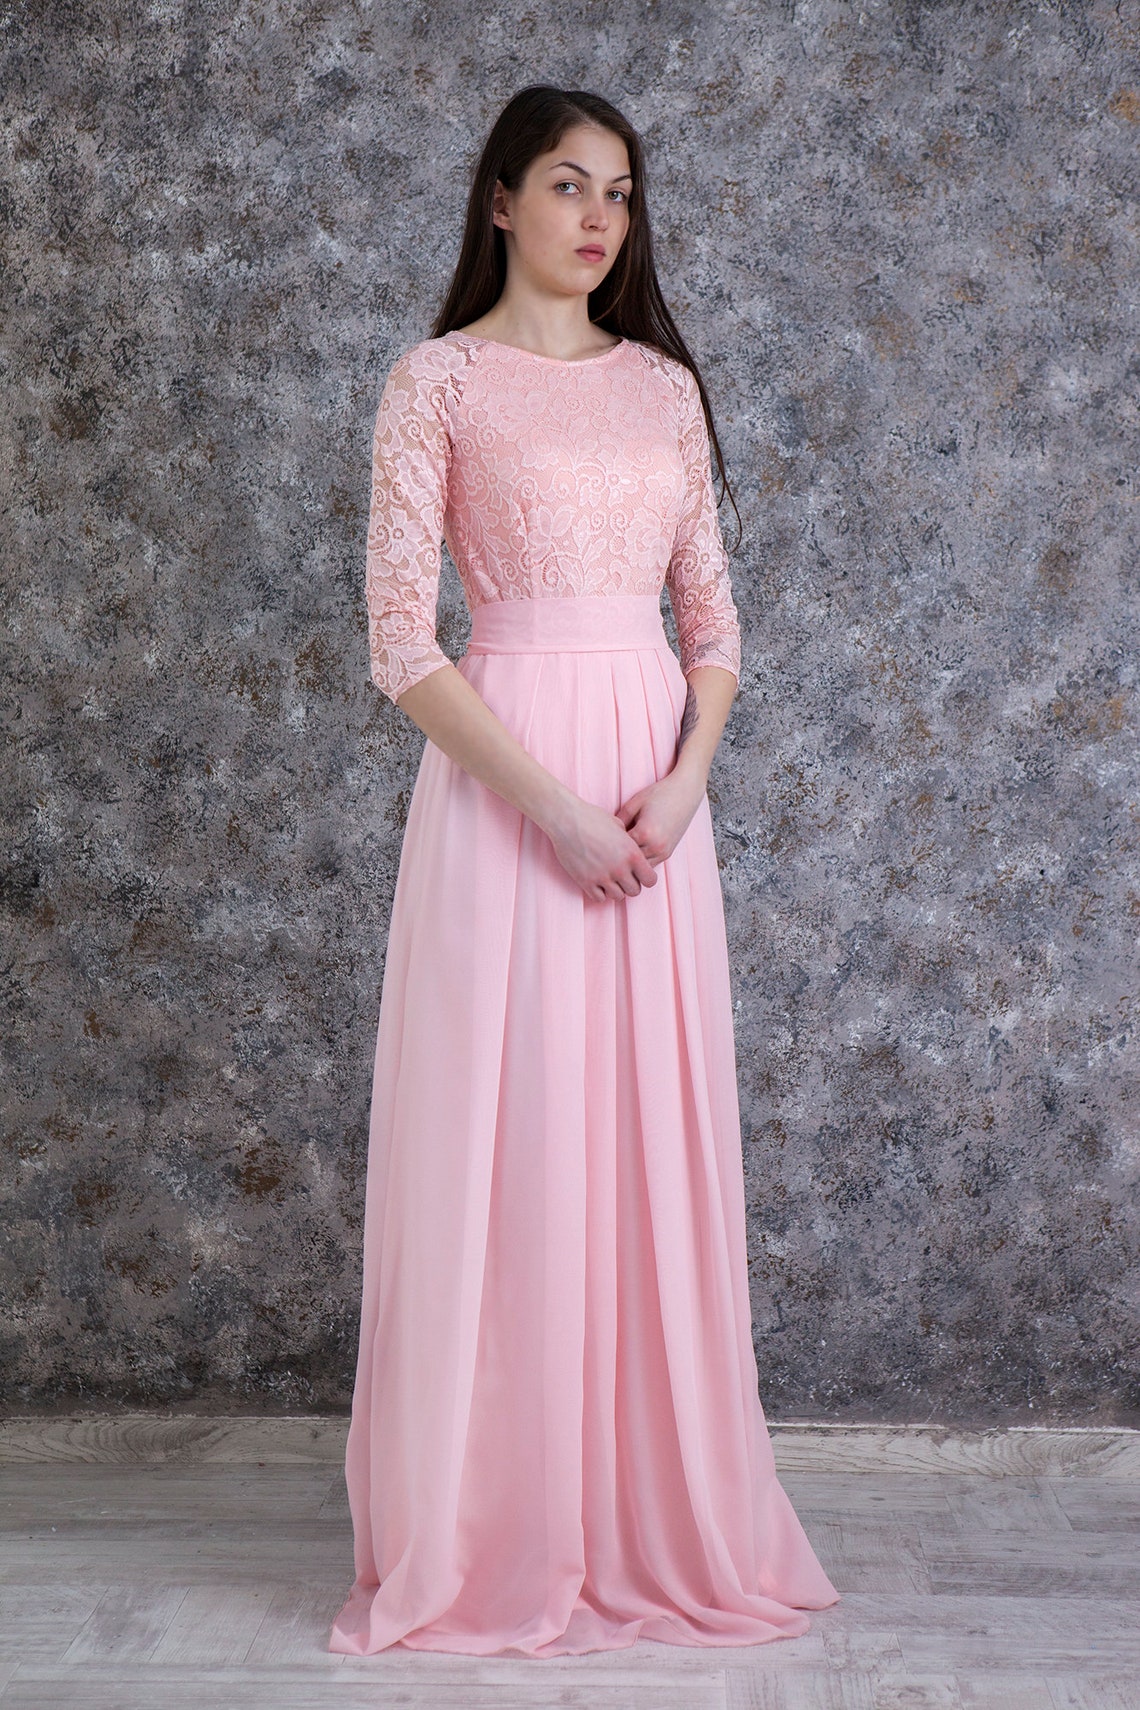 Blush pink bridesmaid dress long. Modest wedding dress with | Etsy